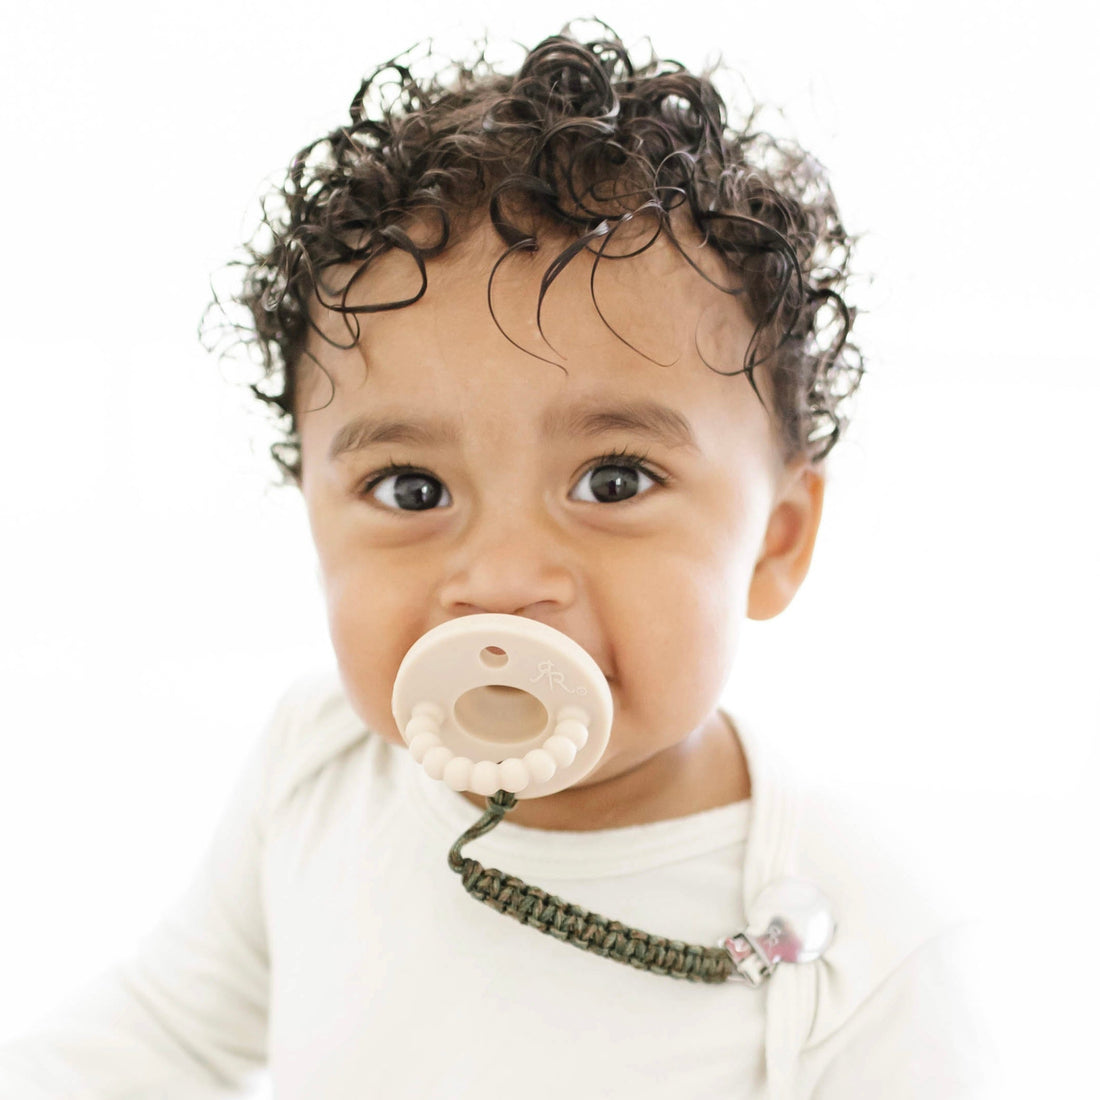 Baby boy wearing a Tan Cutie PAT and Kai Cutie Clip.